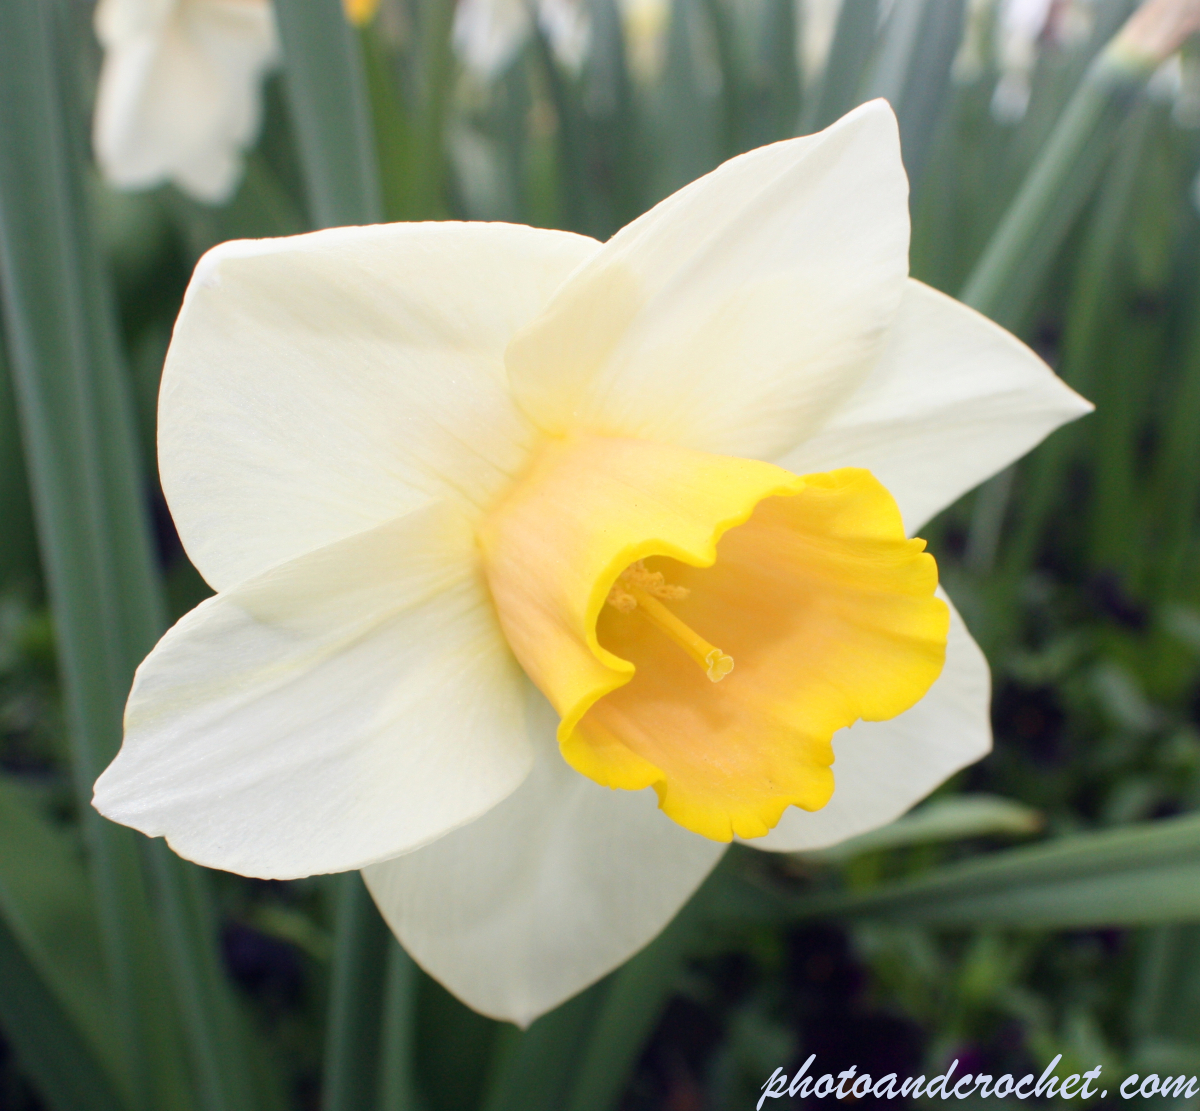 Narcissus - daffodil - Image